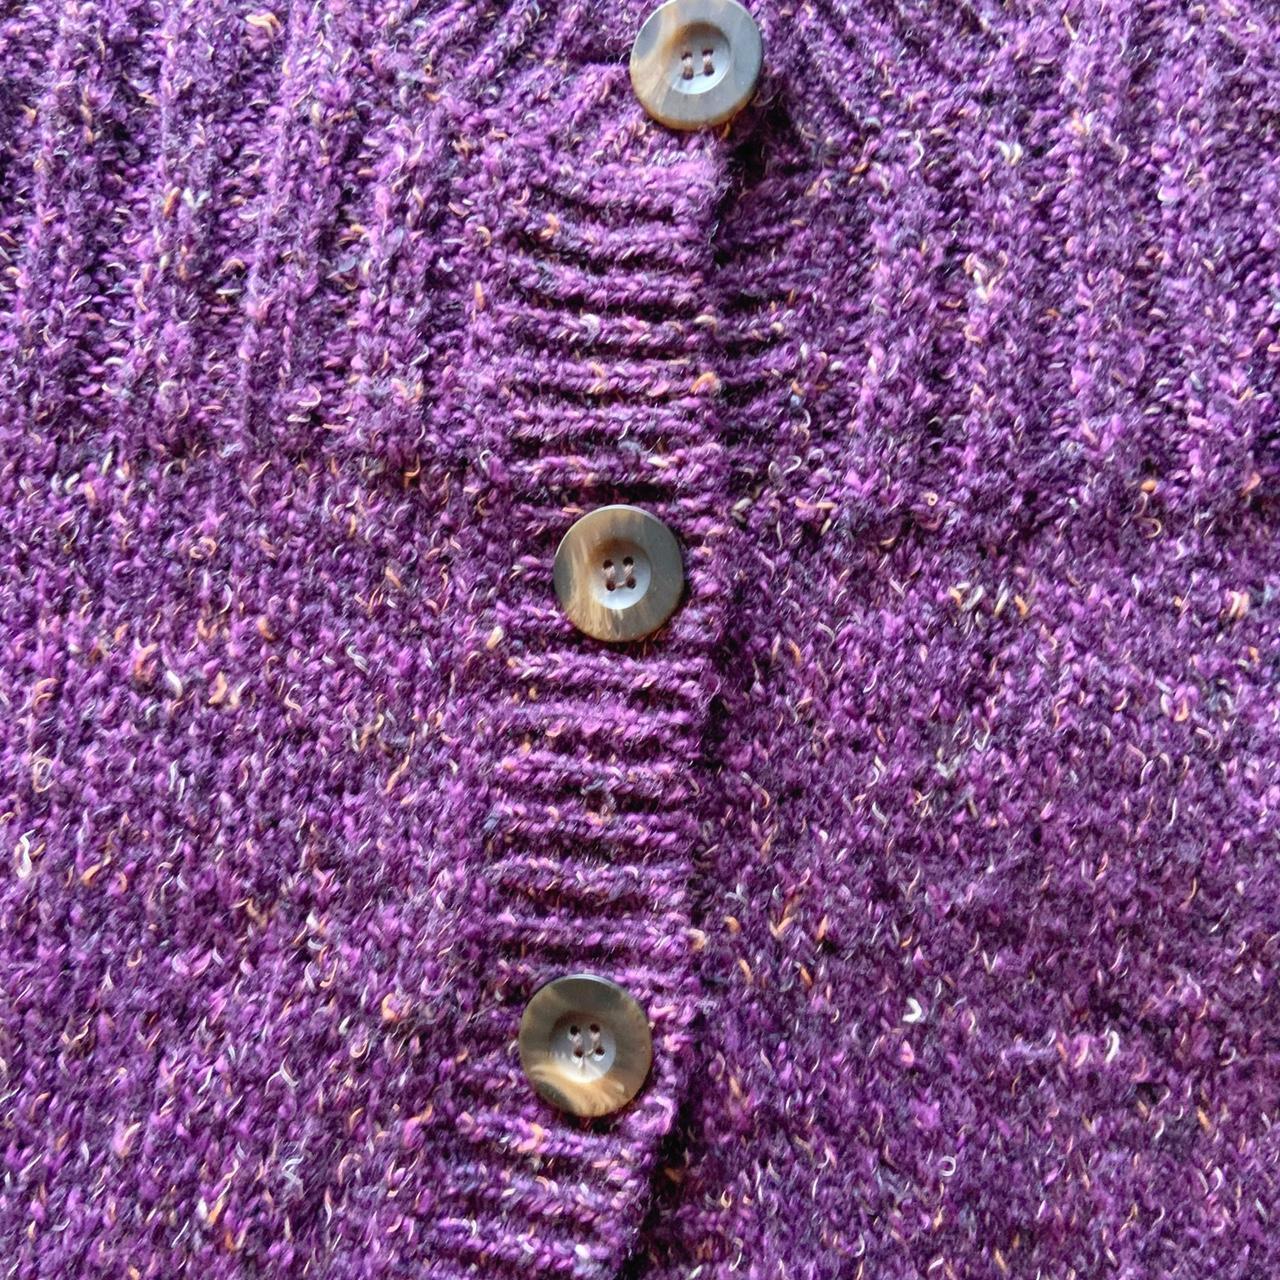 Product Image 3 - Vintage Purple Wool Cardigan

☆ A